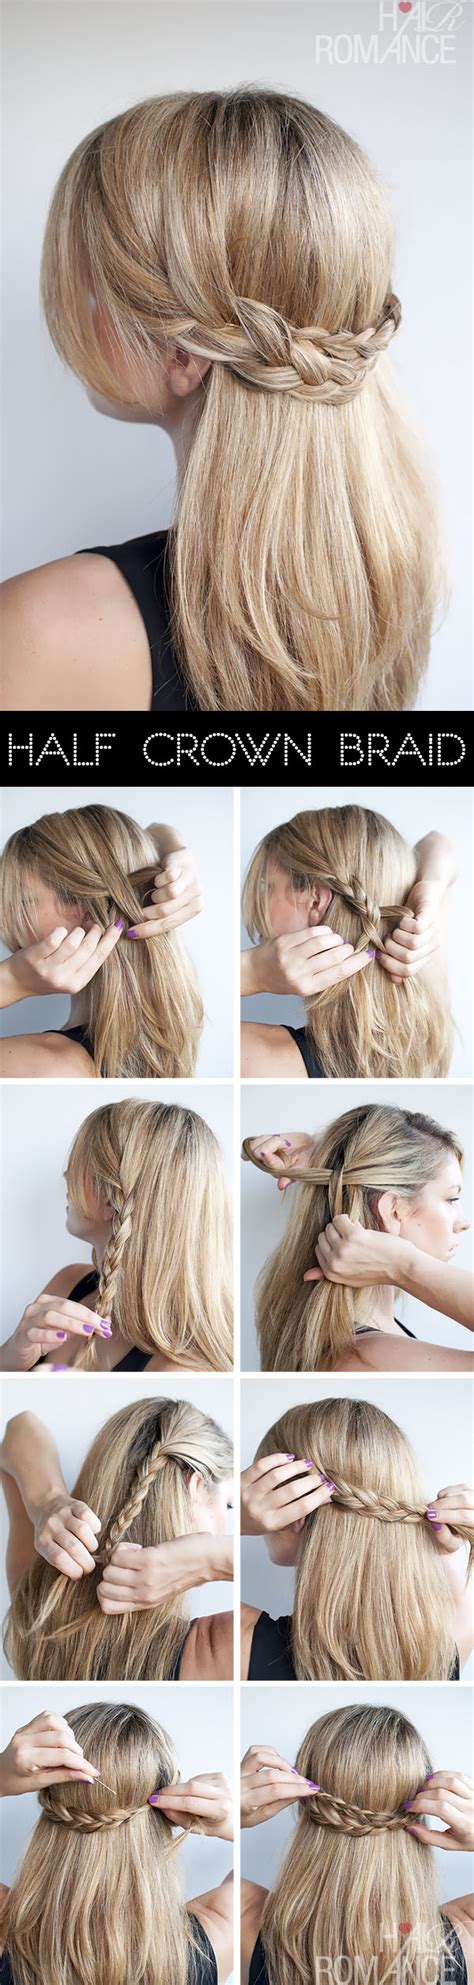 how to make crown braid hairstyle easy braid haristyles